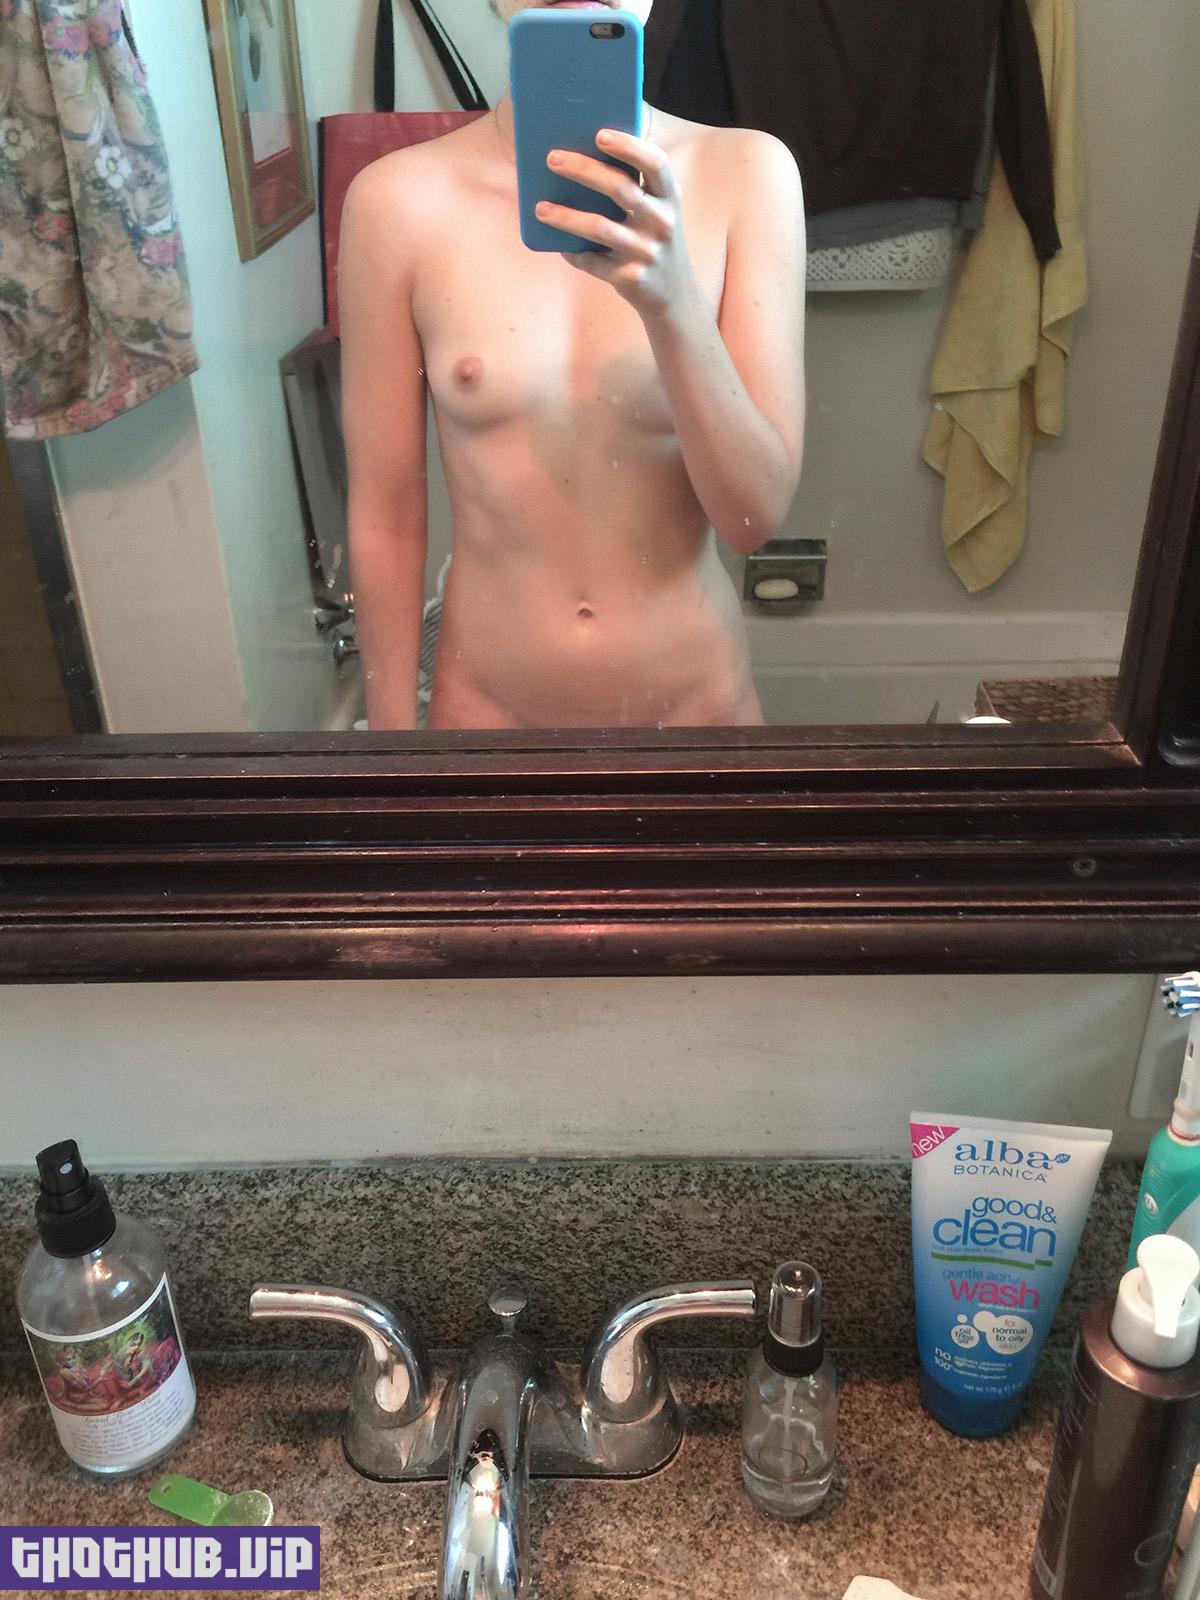 Alexa Nikolas nude photos and video leaked The Fappening